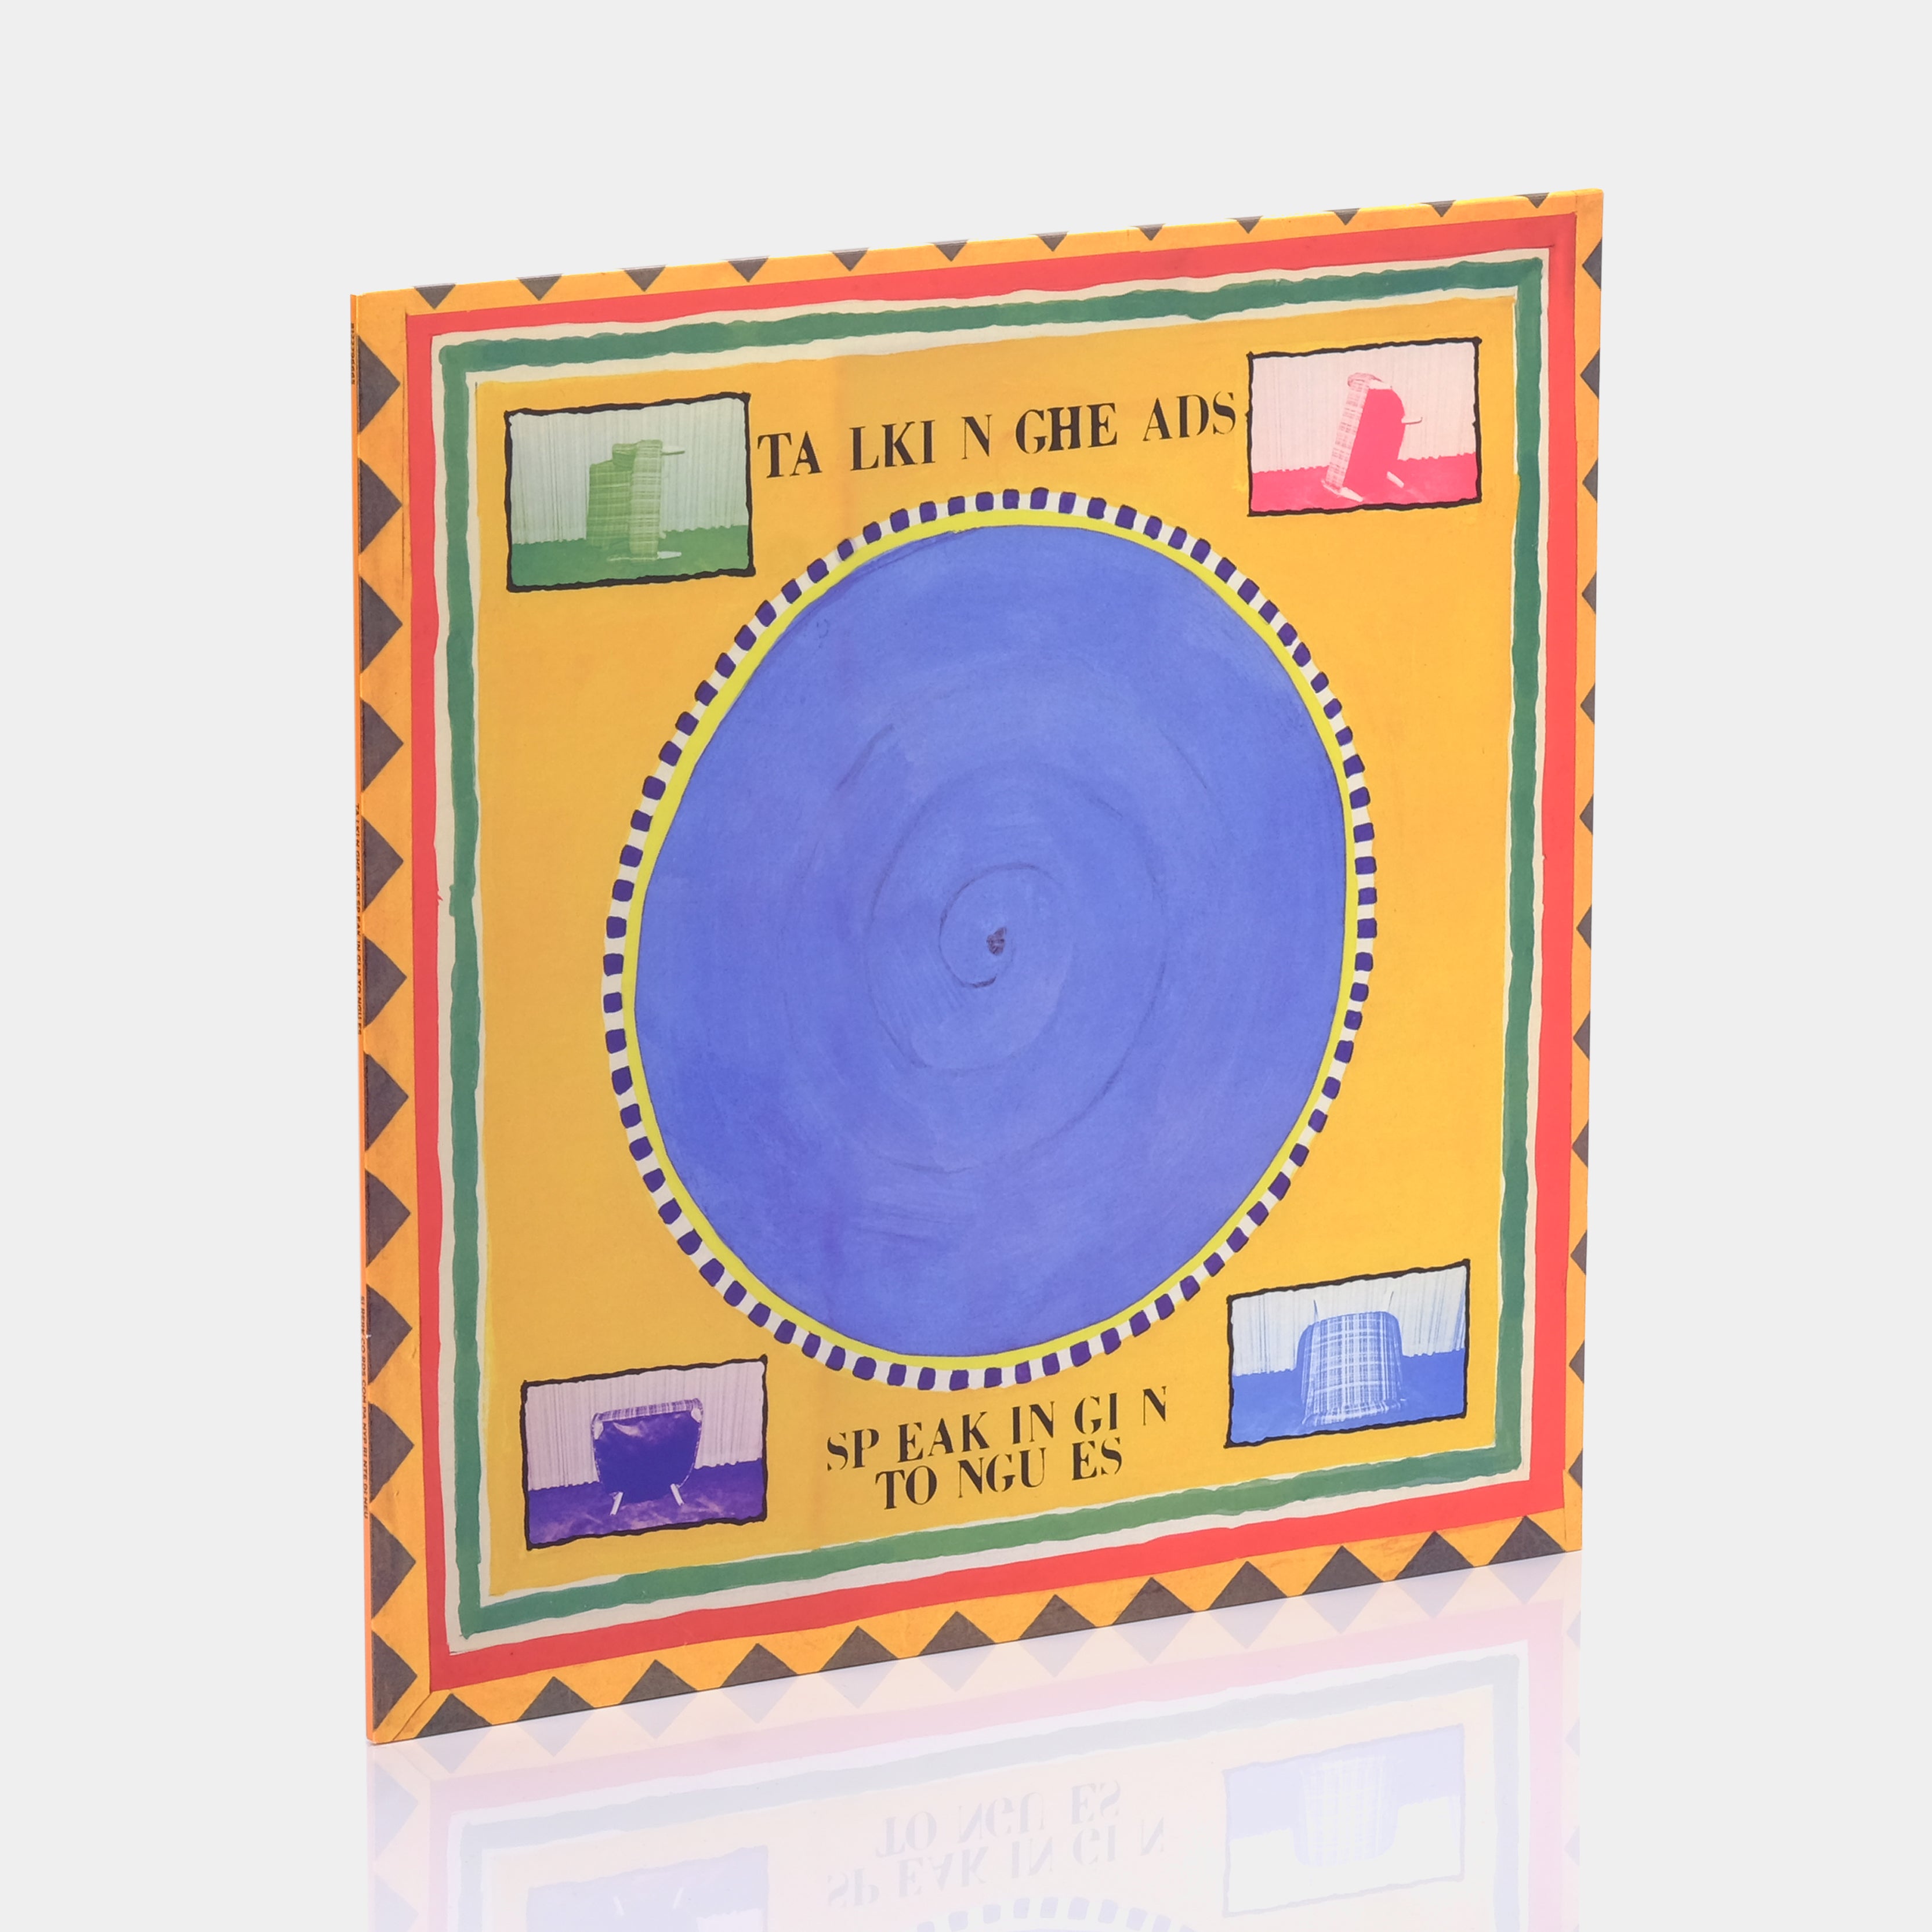 Talking Heads - Speaking In Tongues LP Vinyl Record